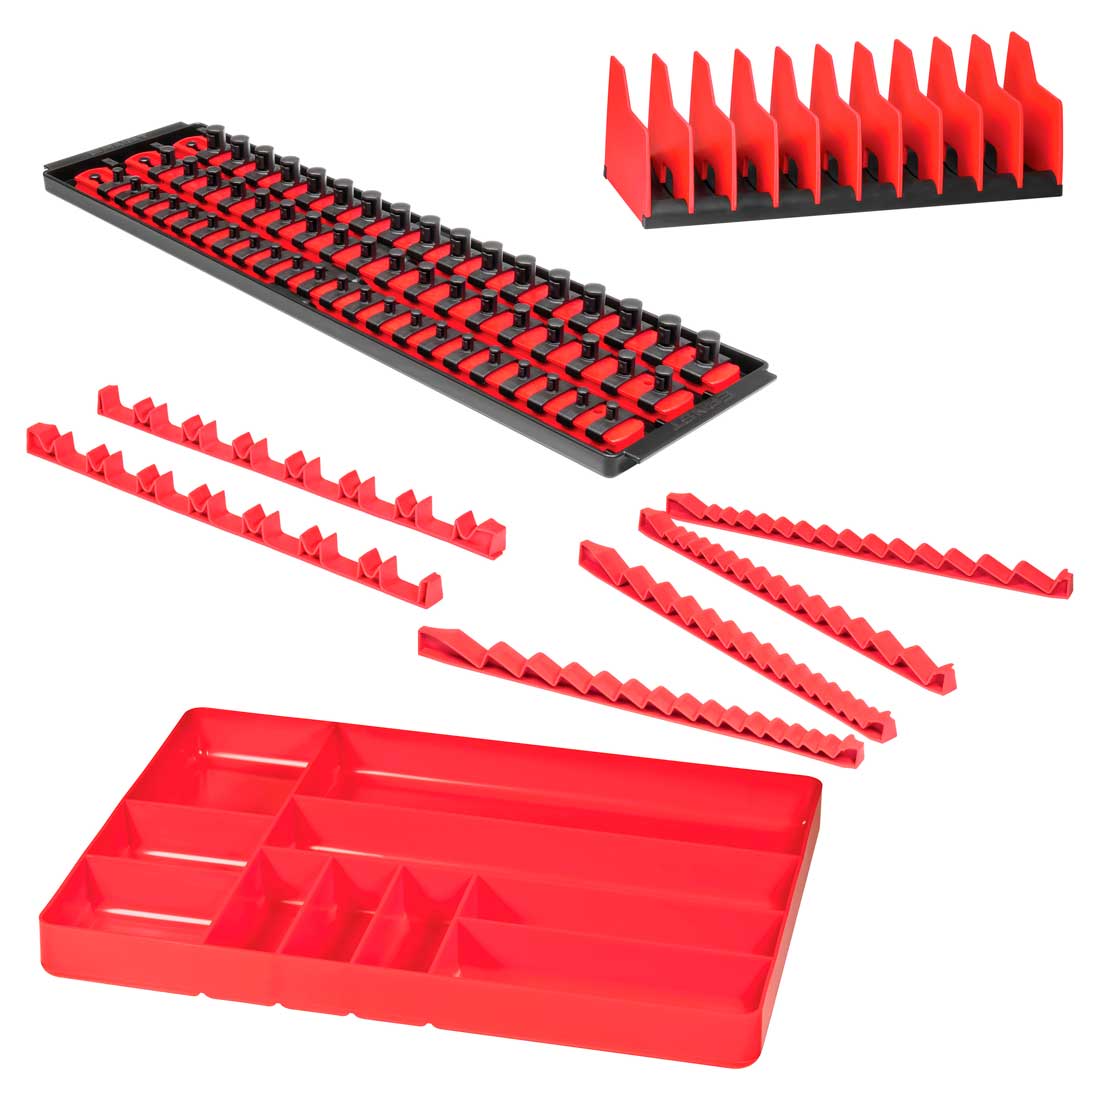 Ernst Mfg 5010-RED Tool Organizer Tray, Red  Tray organization, Tool  organization, Organization